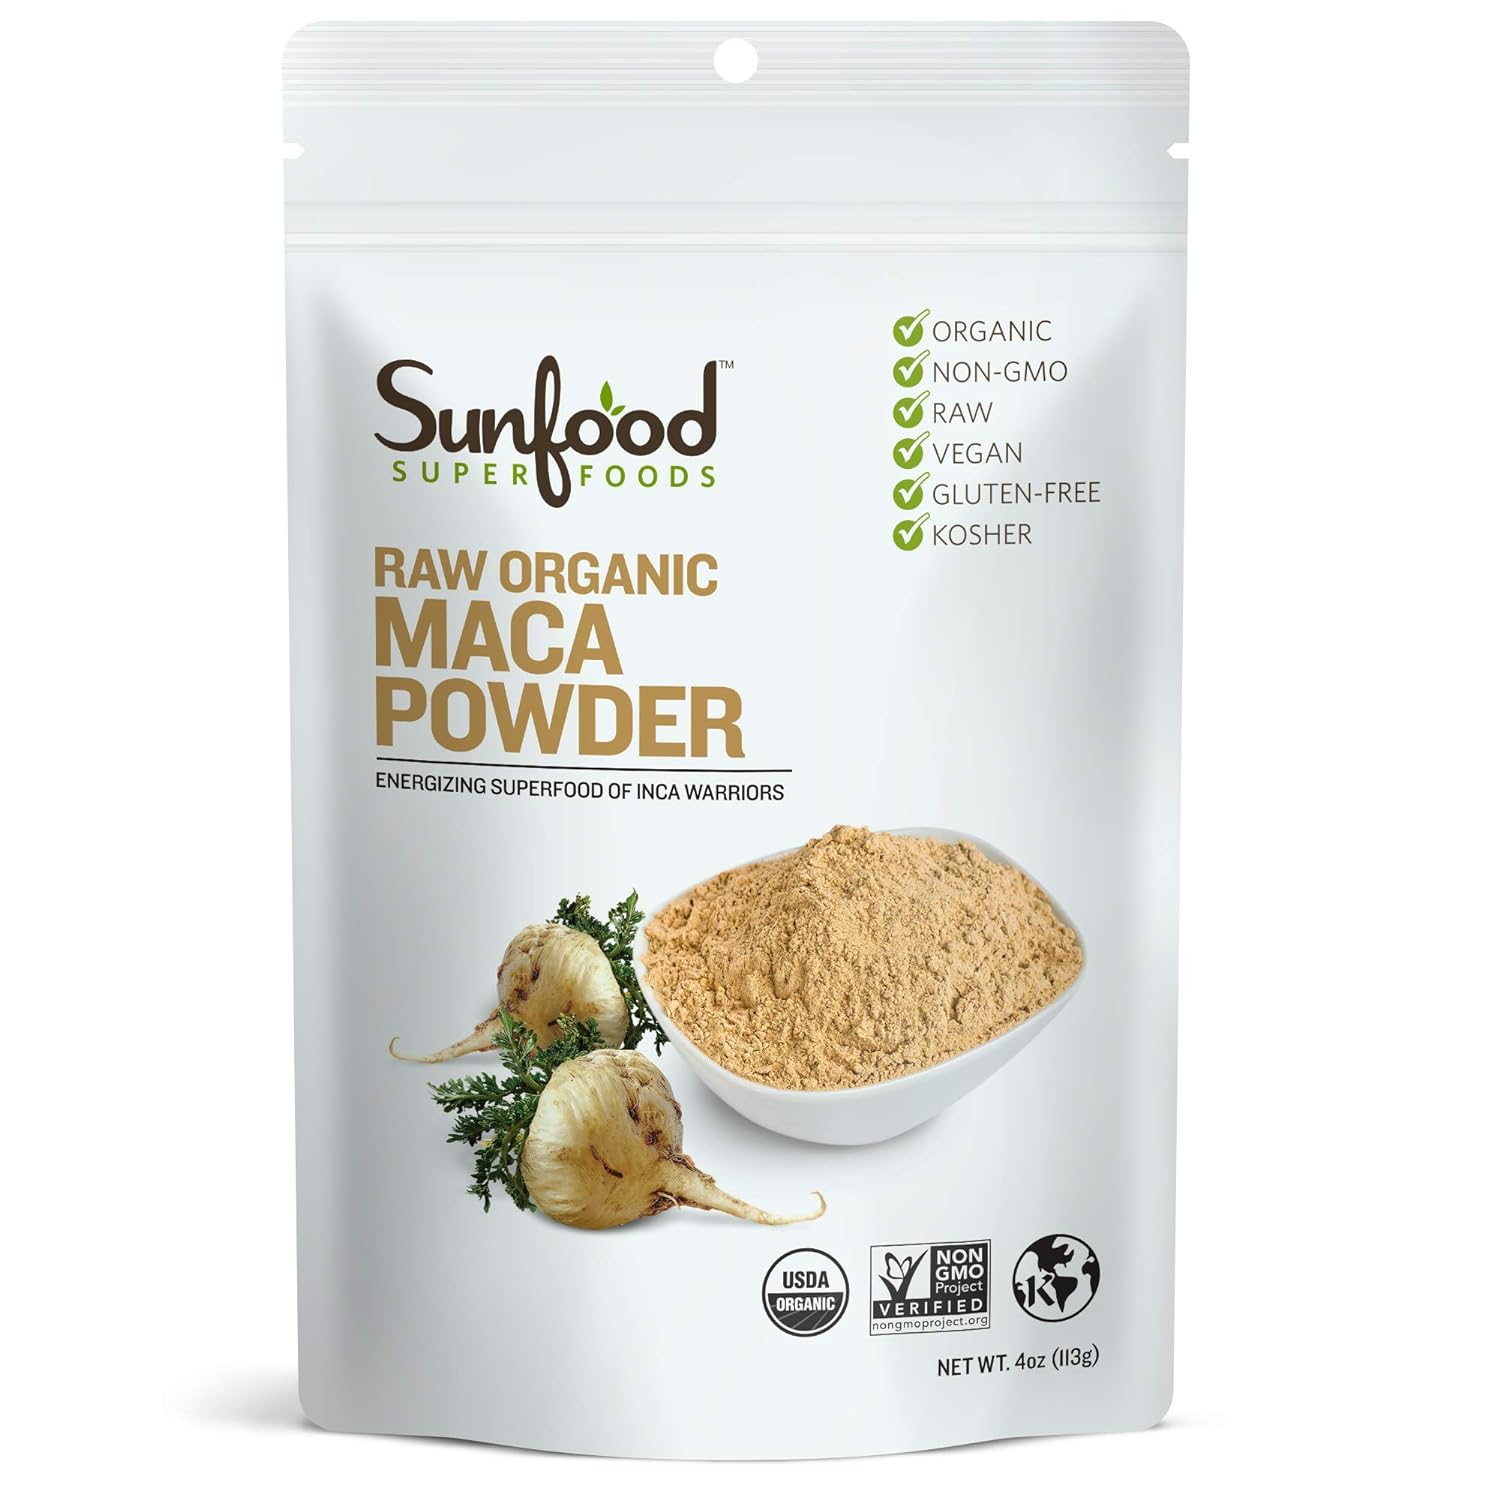 Sunfood Maca Powder- Organic, Raw. for Men & Women. 4 oz Pouch | Maca Supplement - Mix Into Your Favorite Drink